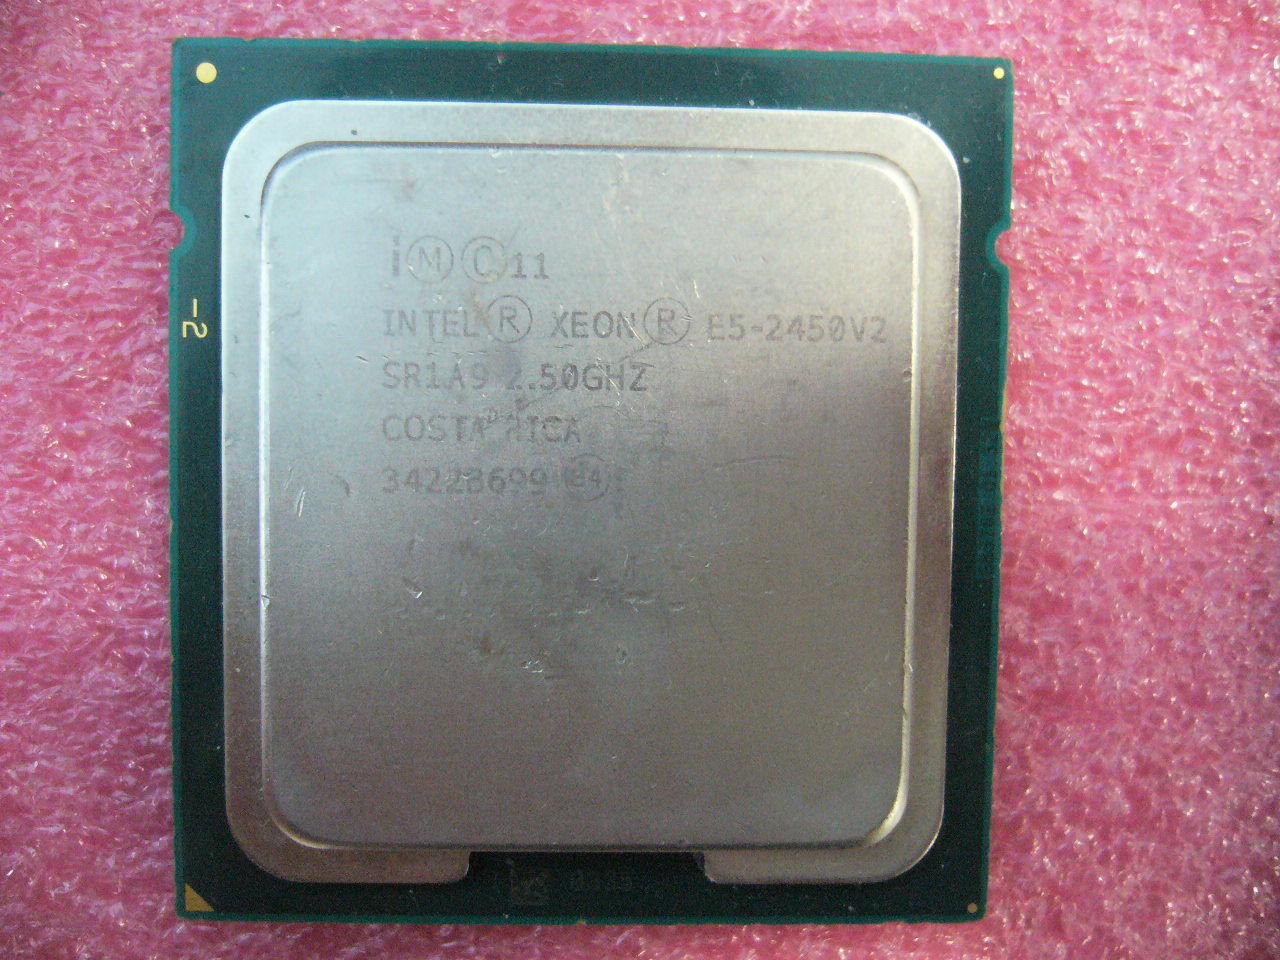 QTY 1x Intel CPU E5-2450 V2 8-Cores 2.5Ghz LGA1356 SR1A9 - zum Schließen ins Bild klicken